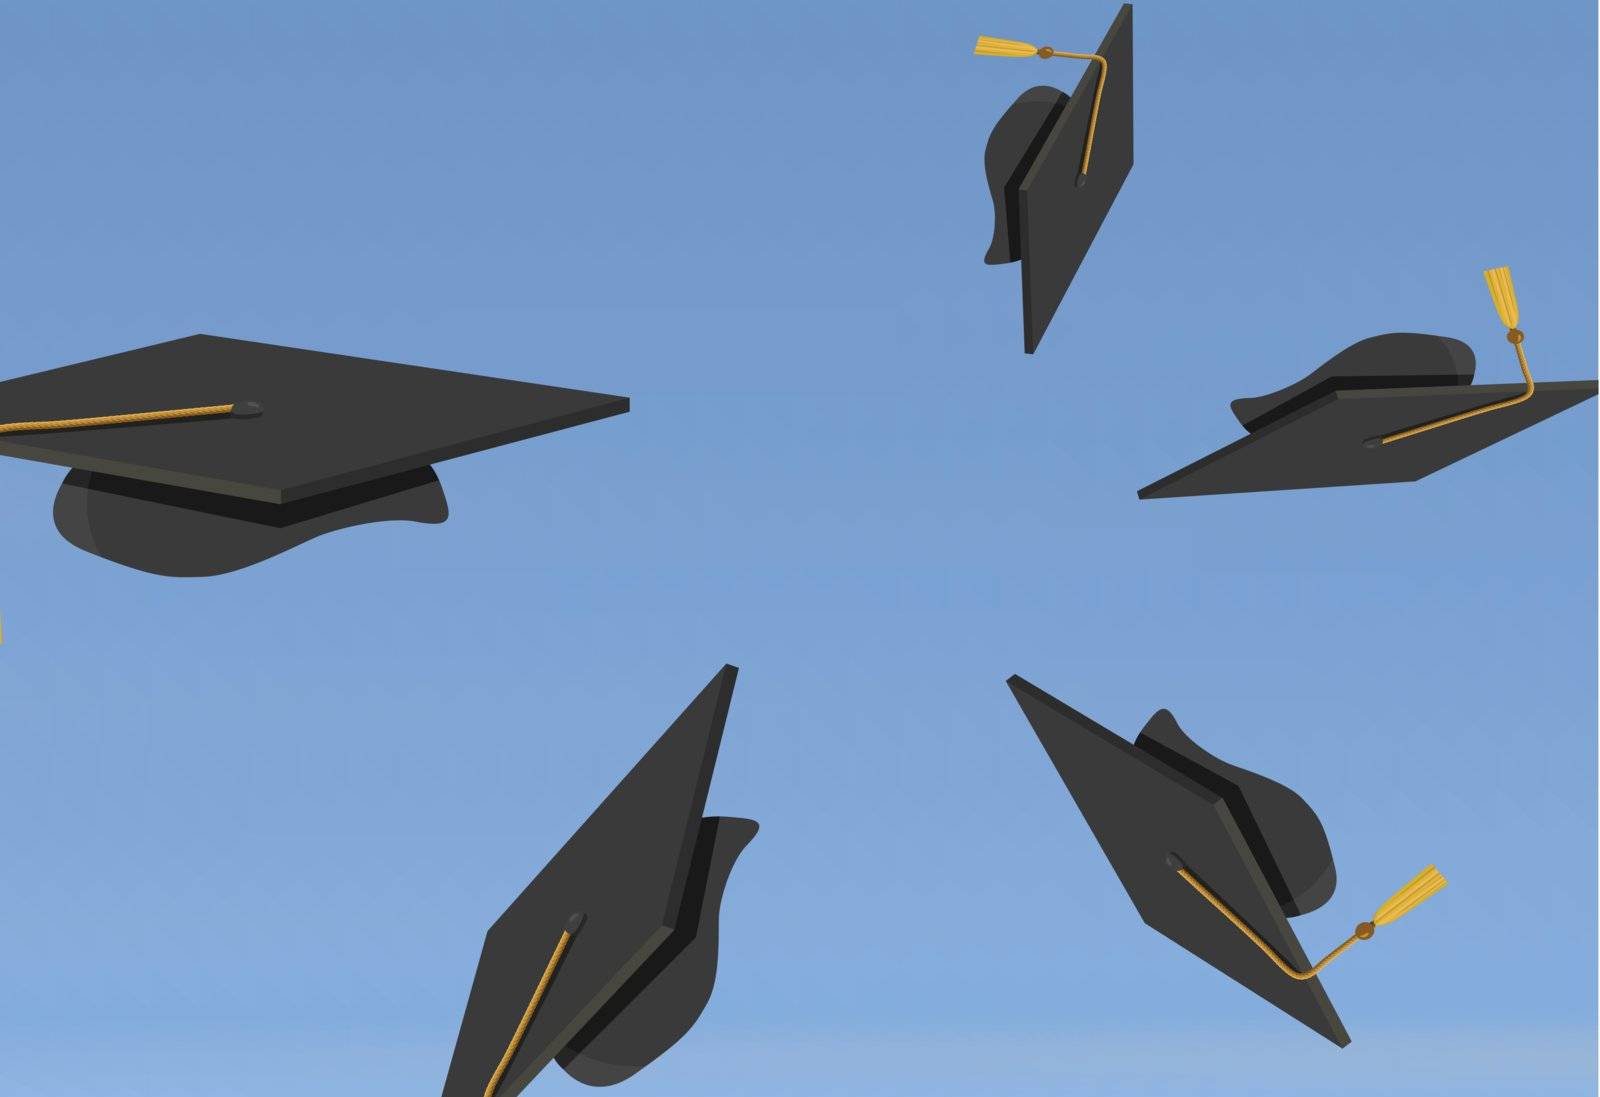 Graduation Caps Thrown in the Air by xprmntl